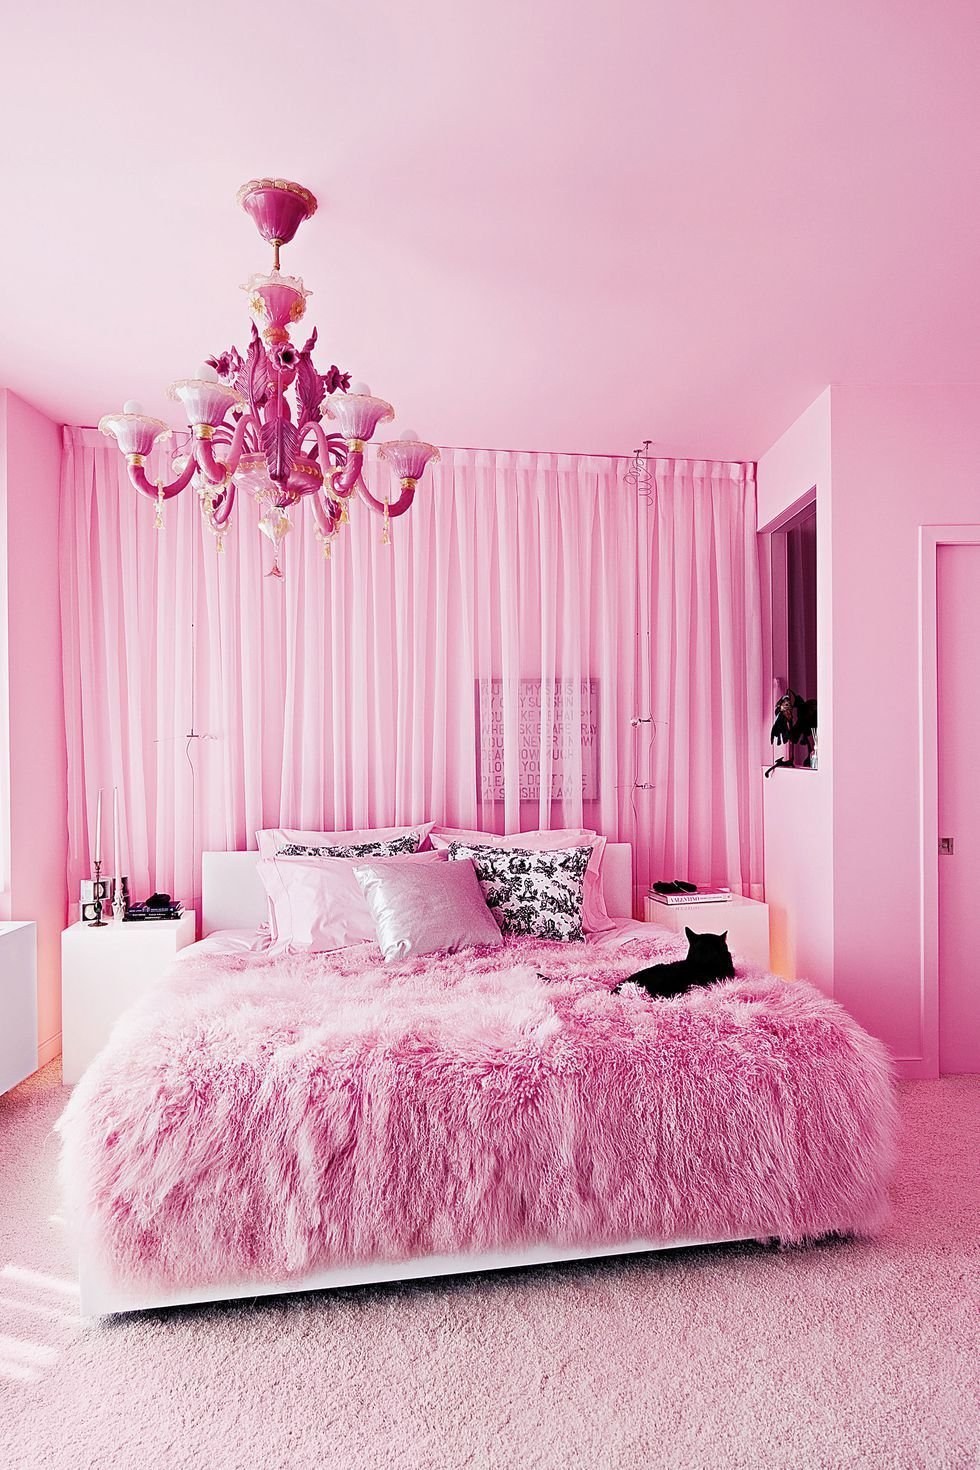 Комната в розовых тонах. Розовая комната для девочки. Розовая спальня. Спальня в розовых тонах. Розовая комната для девушки.